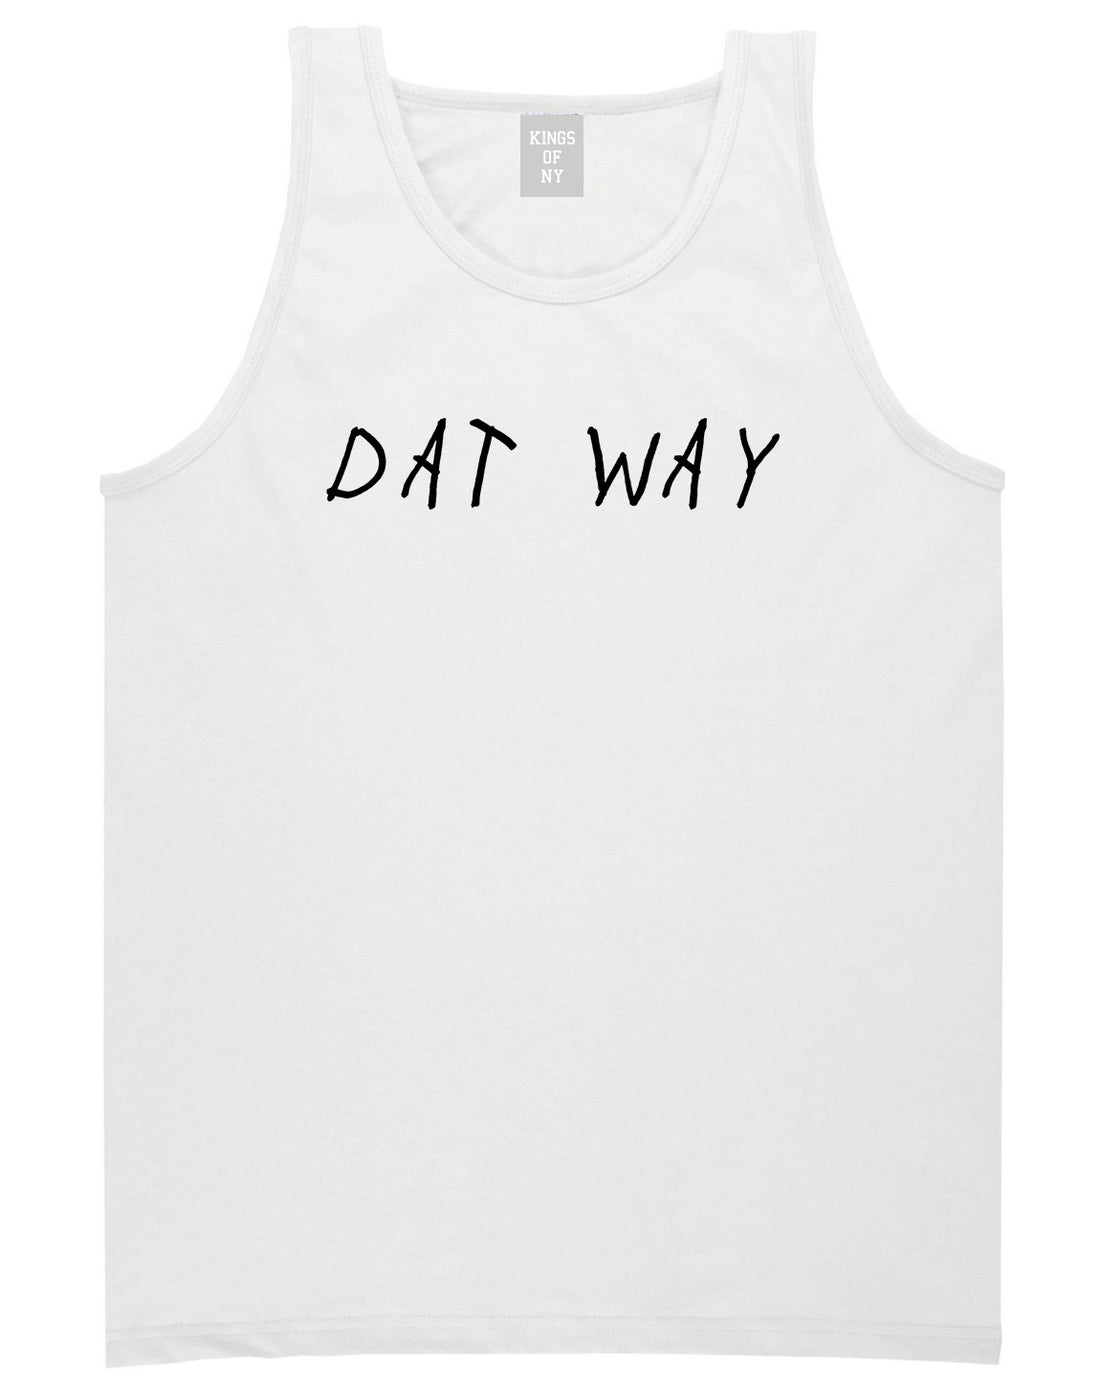 Dat_Way_Font Mens White Tank Top Shirt by Kings Of NY